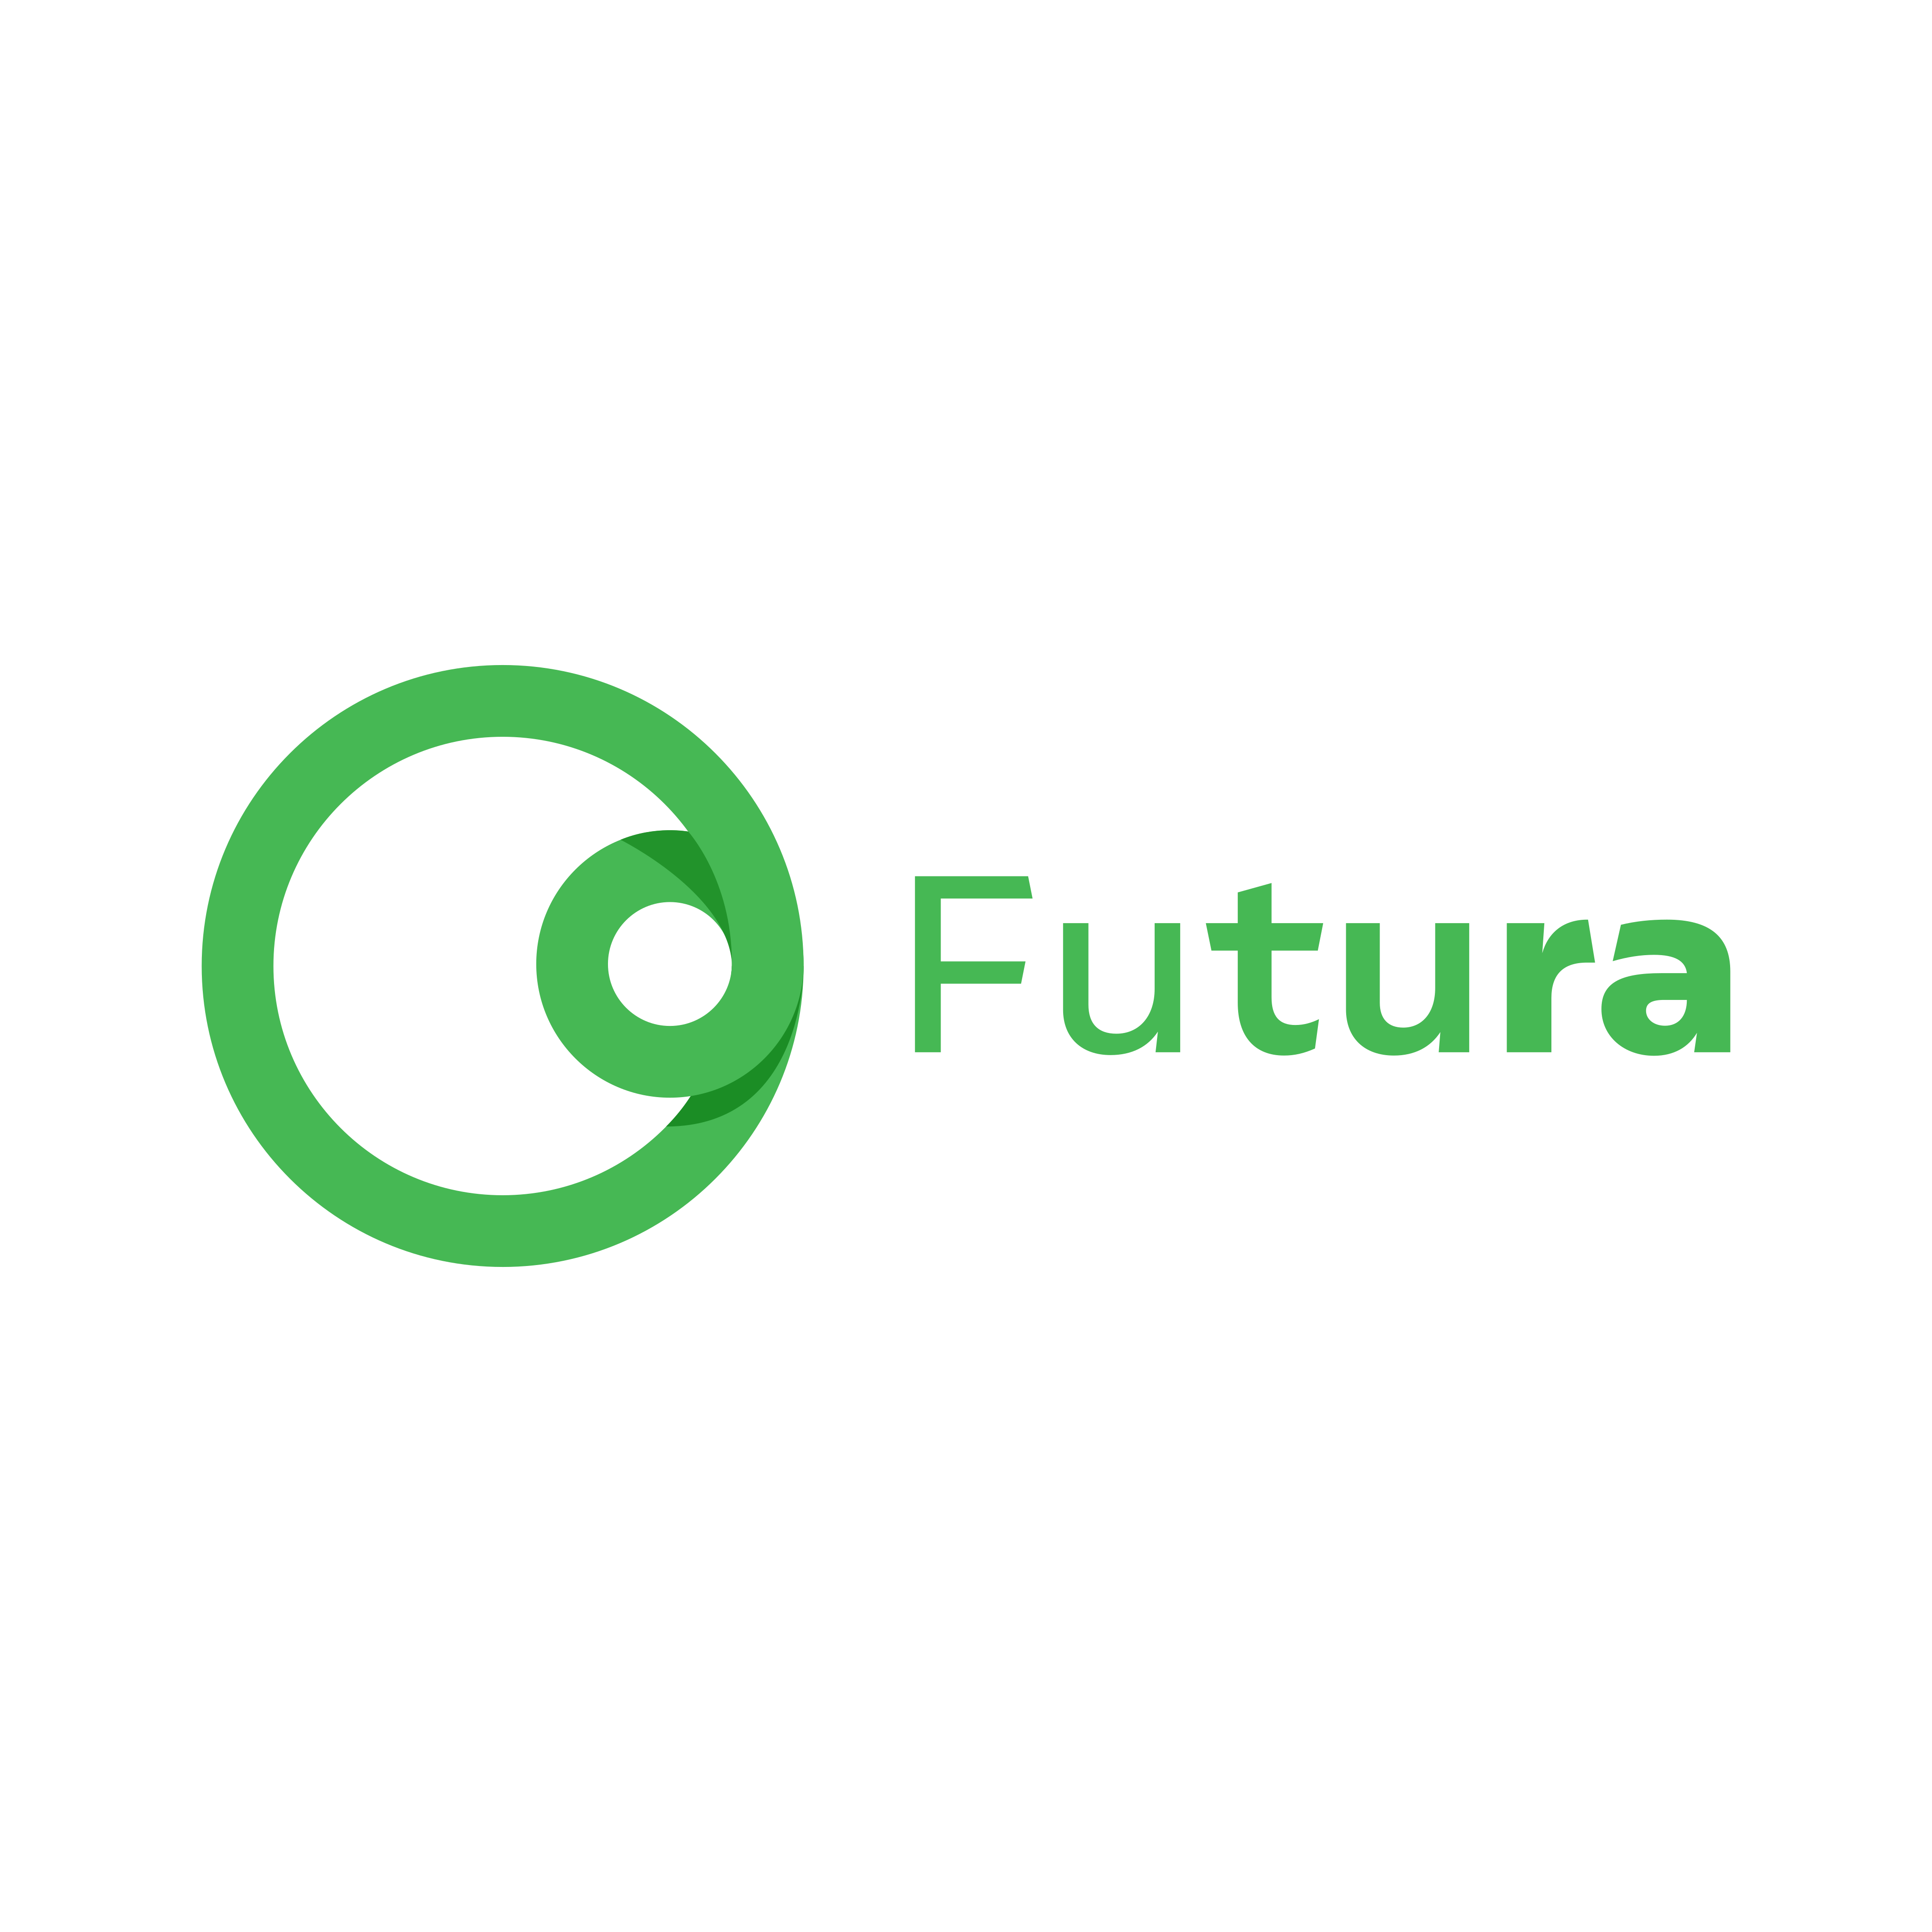 Futura Logo PNG.